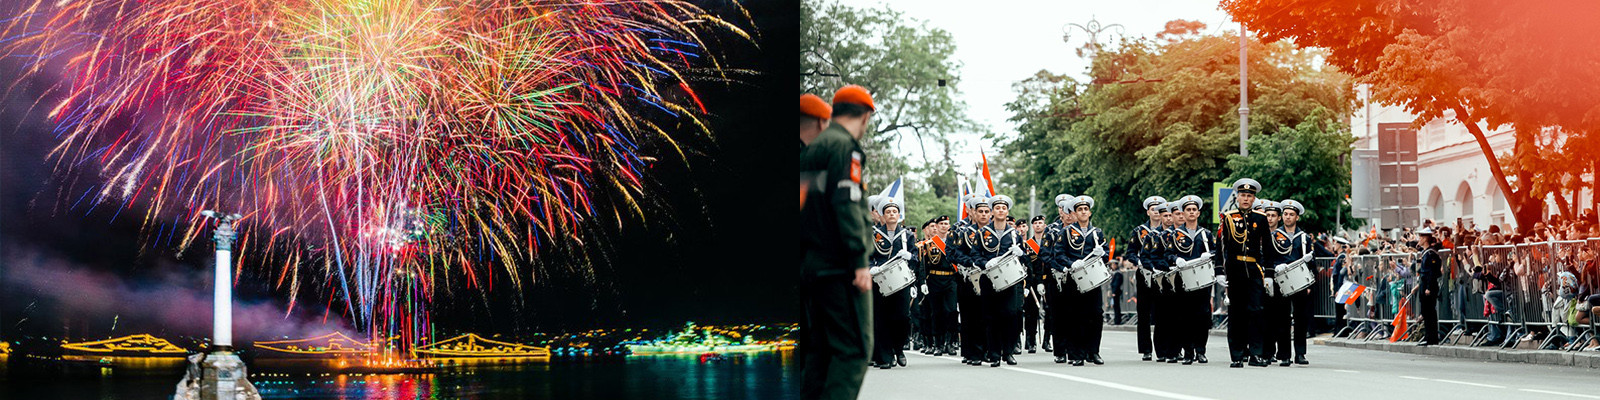 Парад и фейерверк в Севастополе на майские праздники